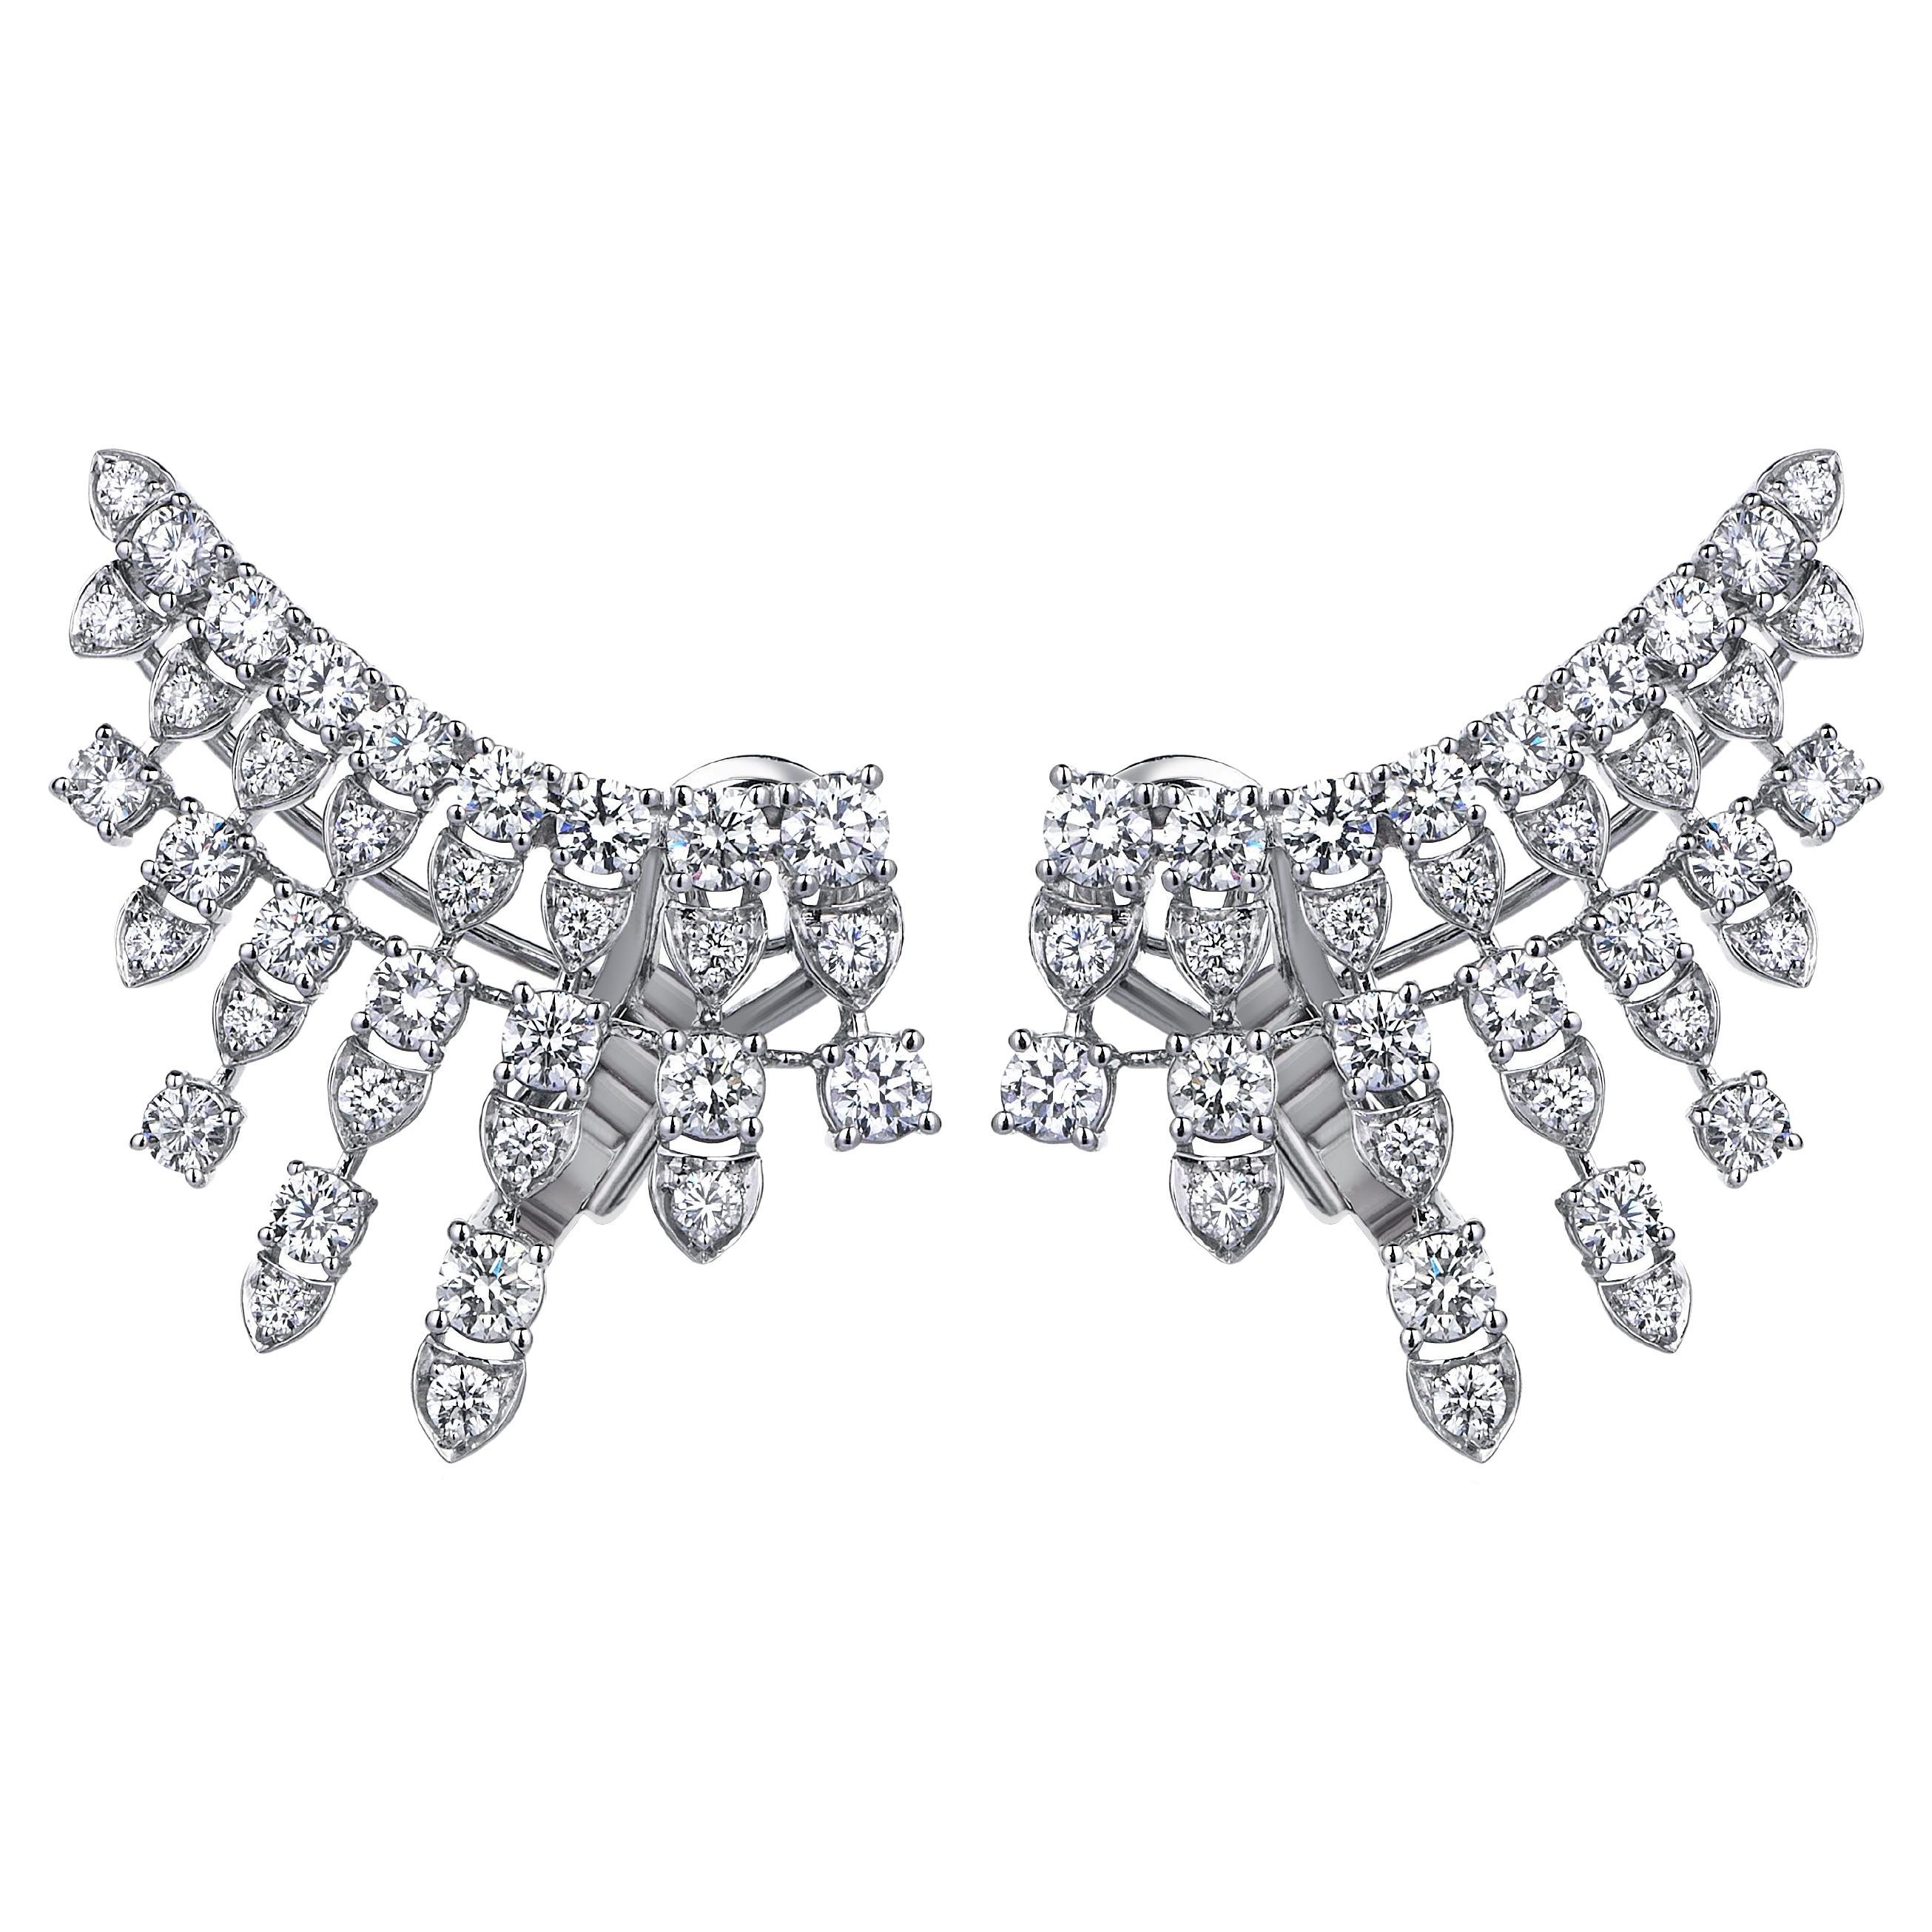 Limited Edition Monan Diamond Earrings